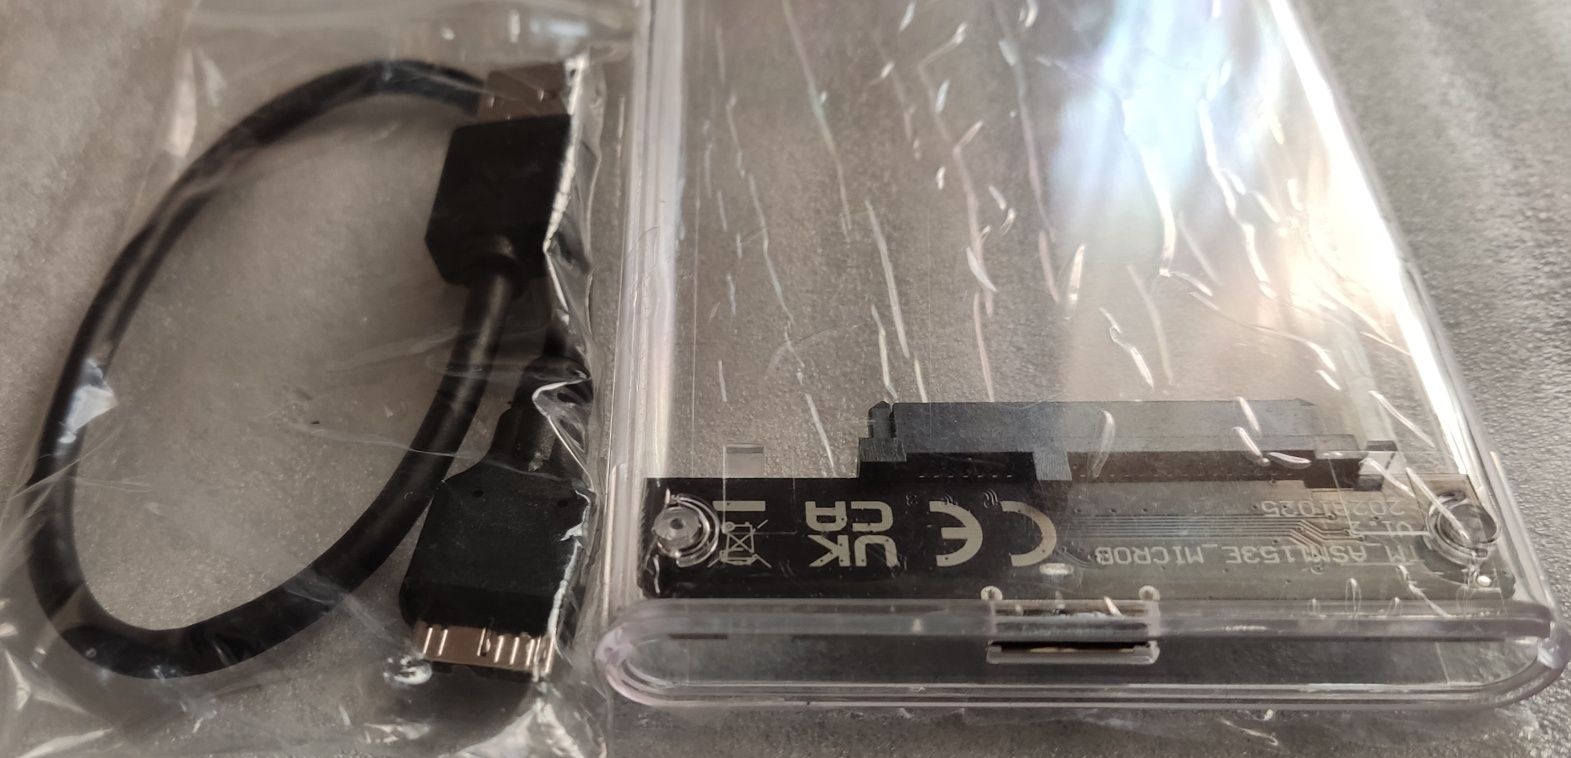 Новый внешний карман USB 3.0 - SATA для подключения HDD/SSD 2,5